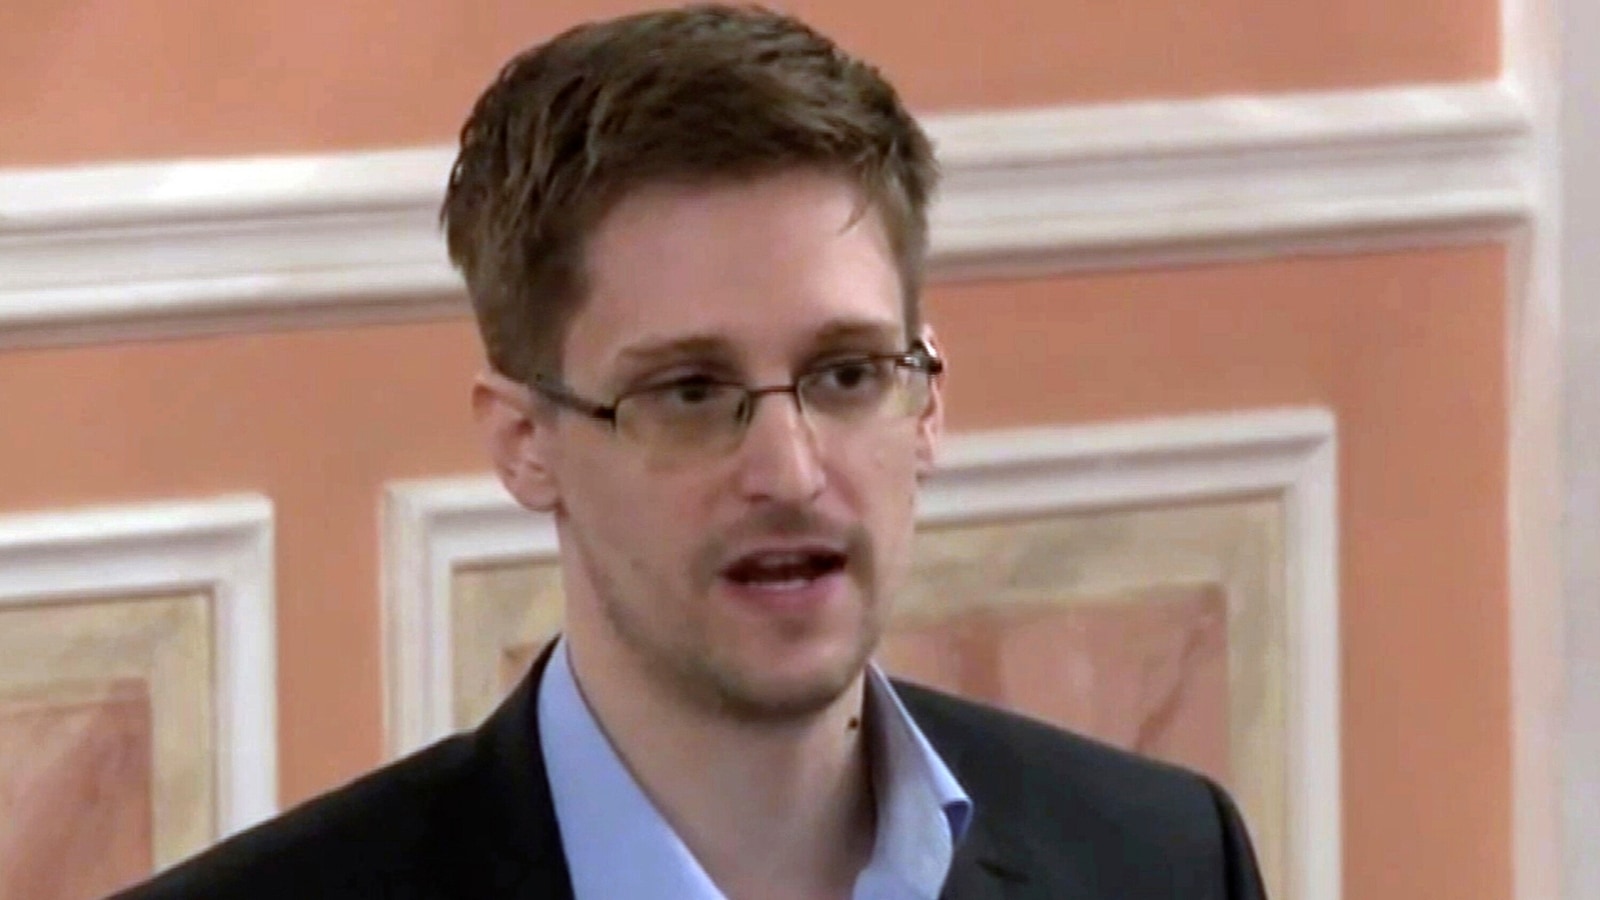 Putin udelil ruské občianstvo americkému whistleblowerovi Snowdenovi |  Svetové novinky